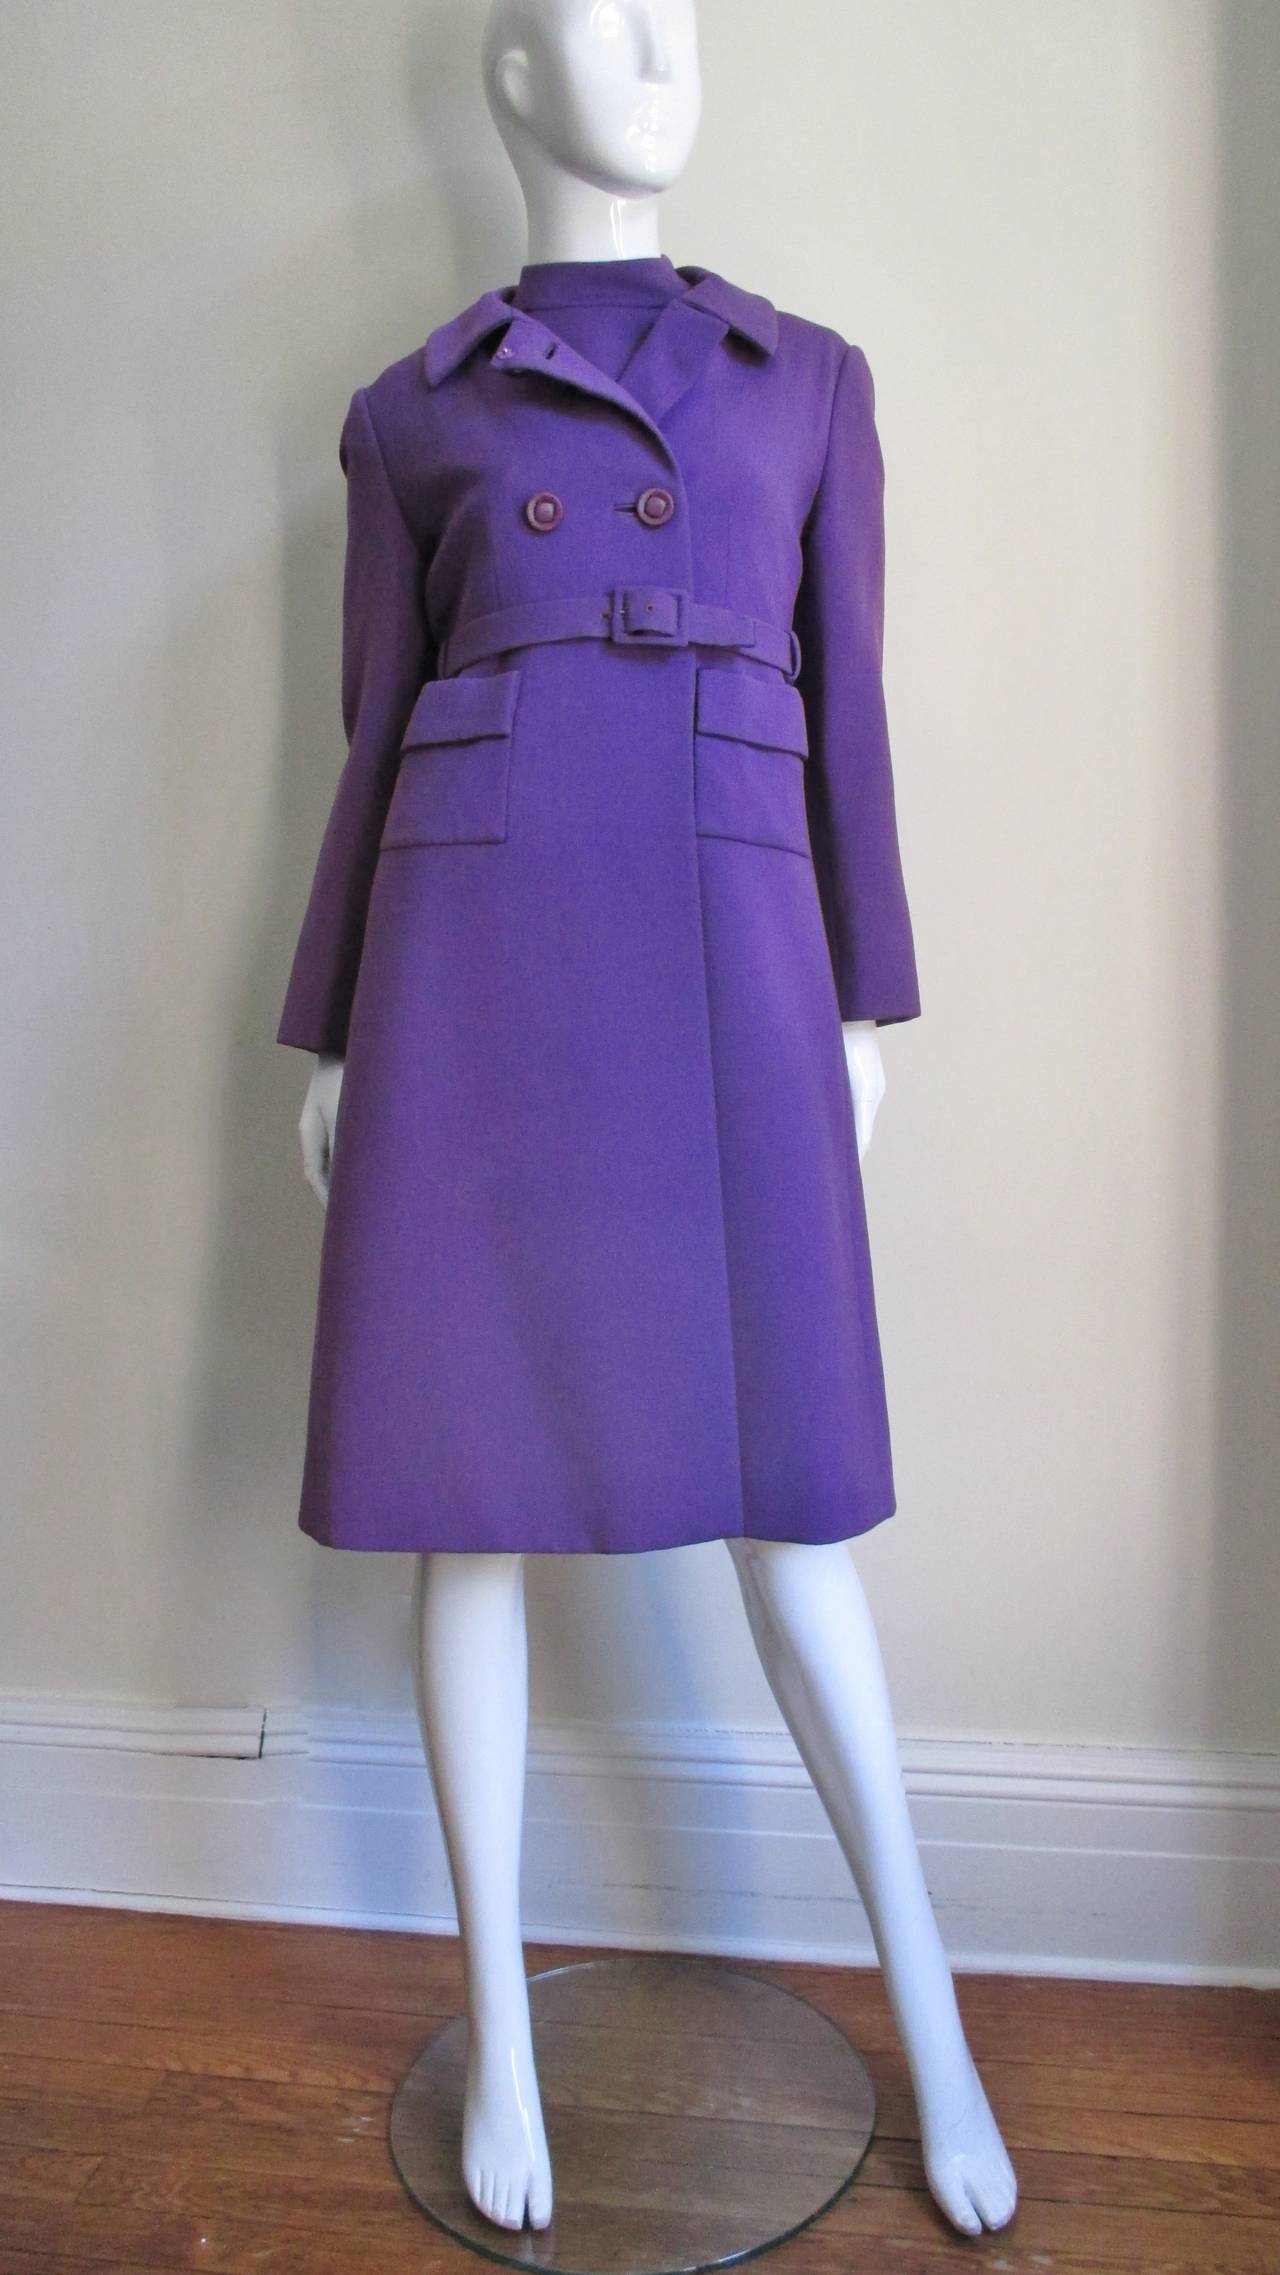 Women's Yves St Laurent for Christian Dior 1960s Dress and Coat